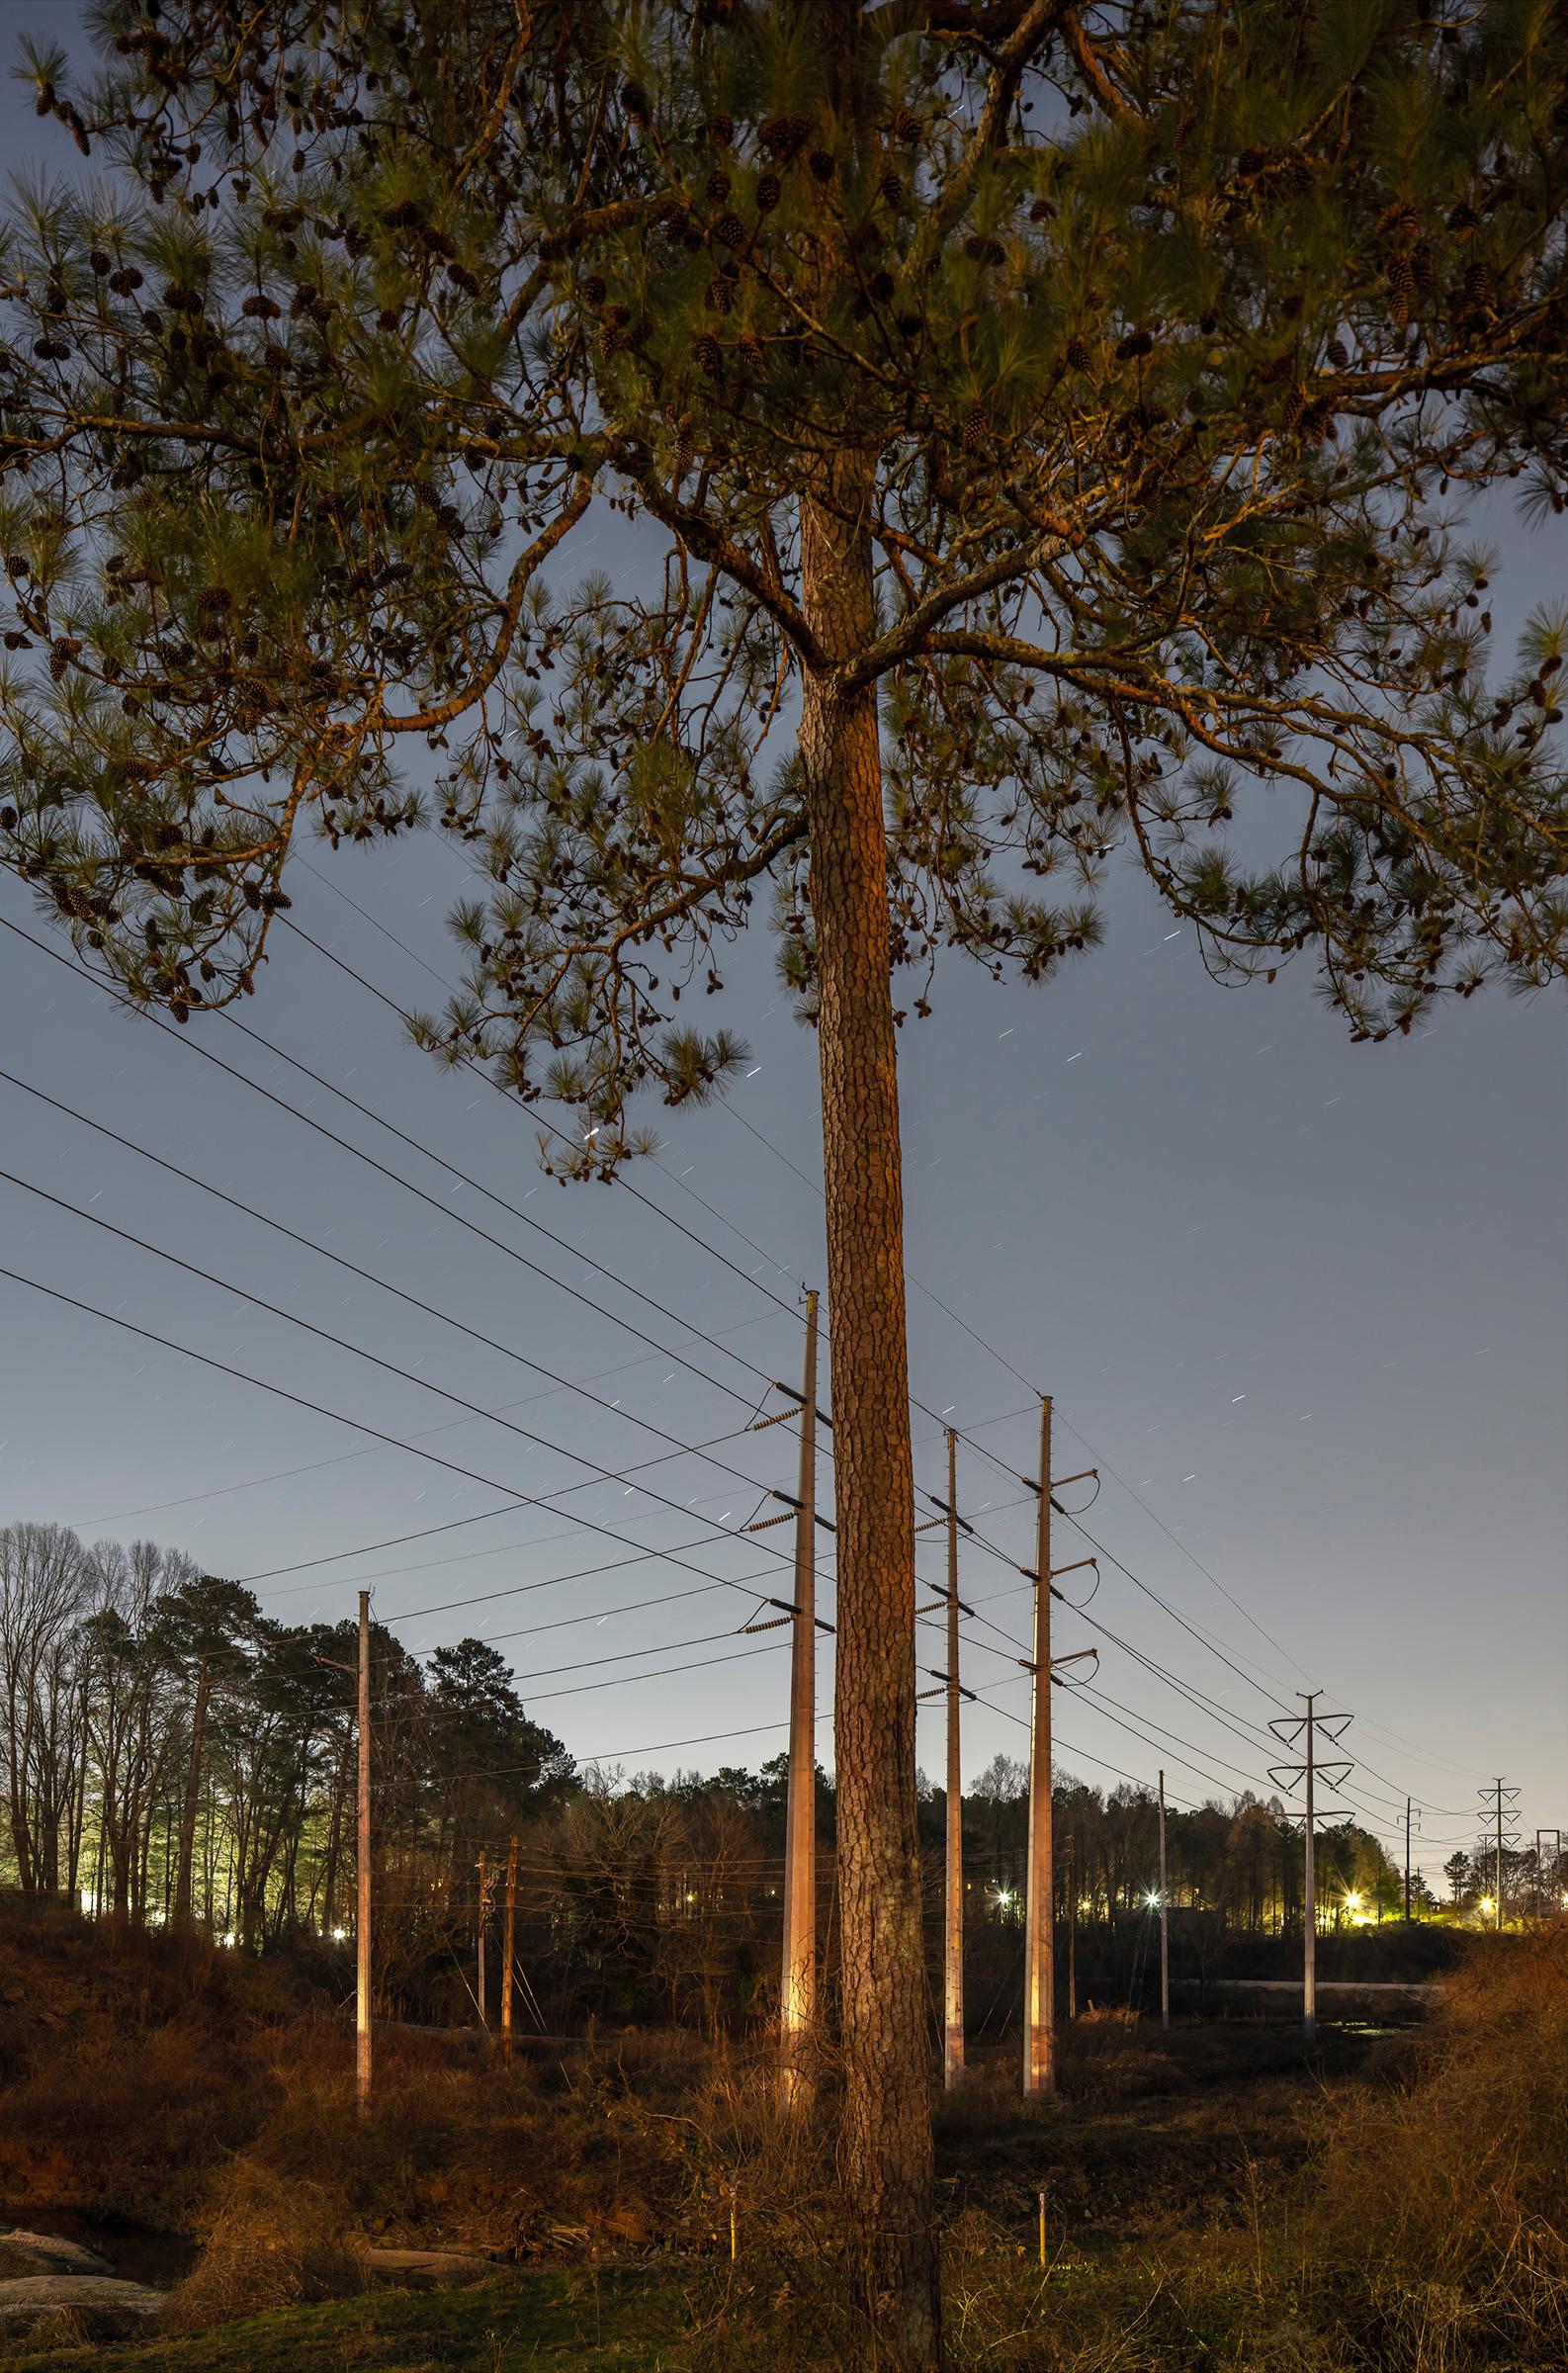 Peter Essick Color Photograph - "Loblolly Pine #1, Decatur, GA" Anthropocene landscape photography - Ray Metzker